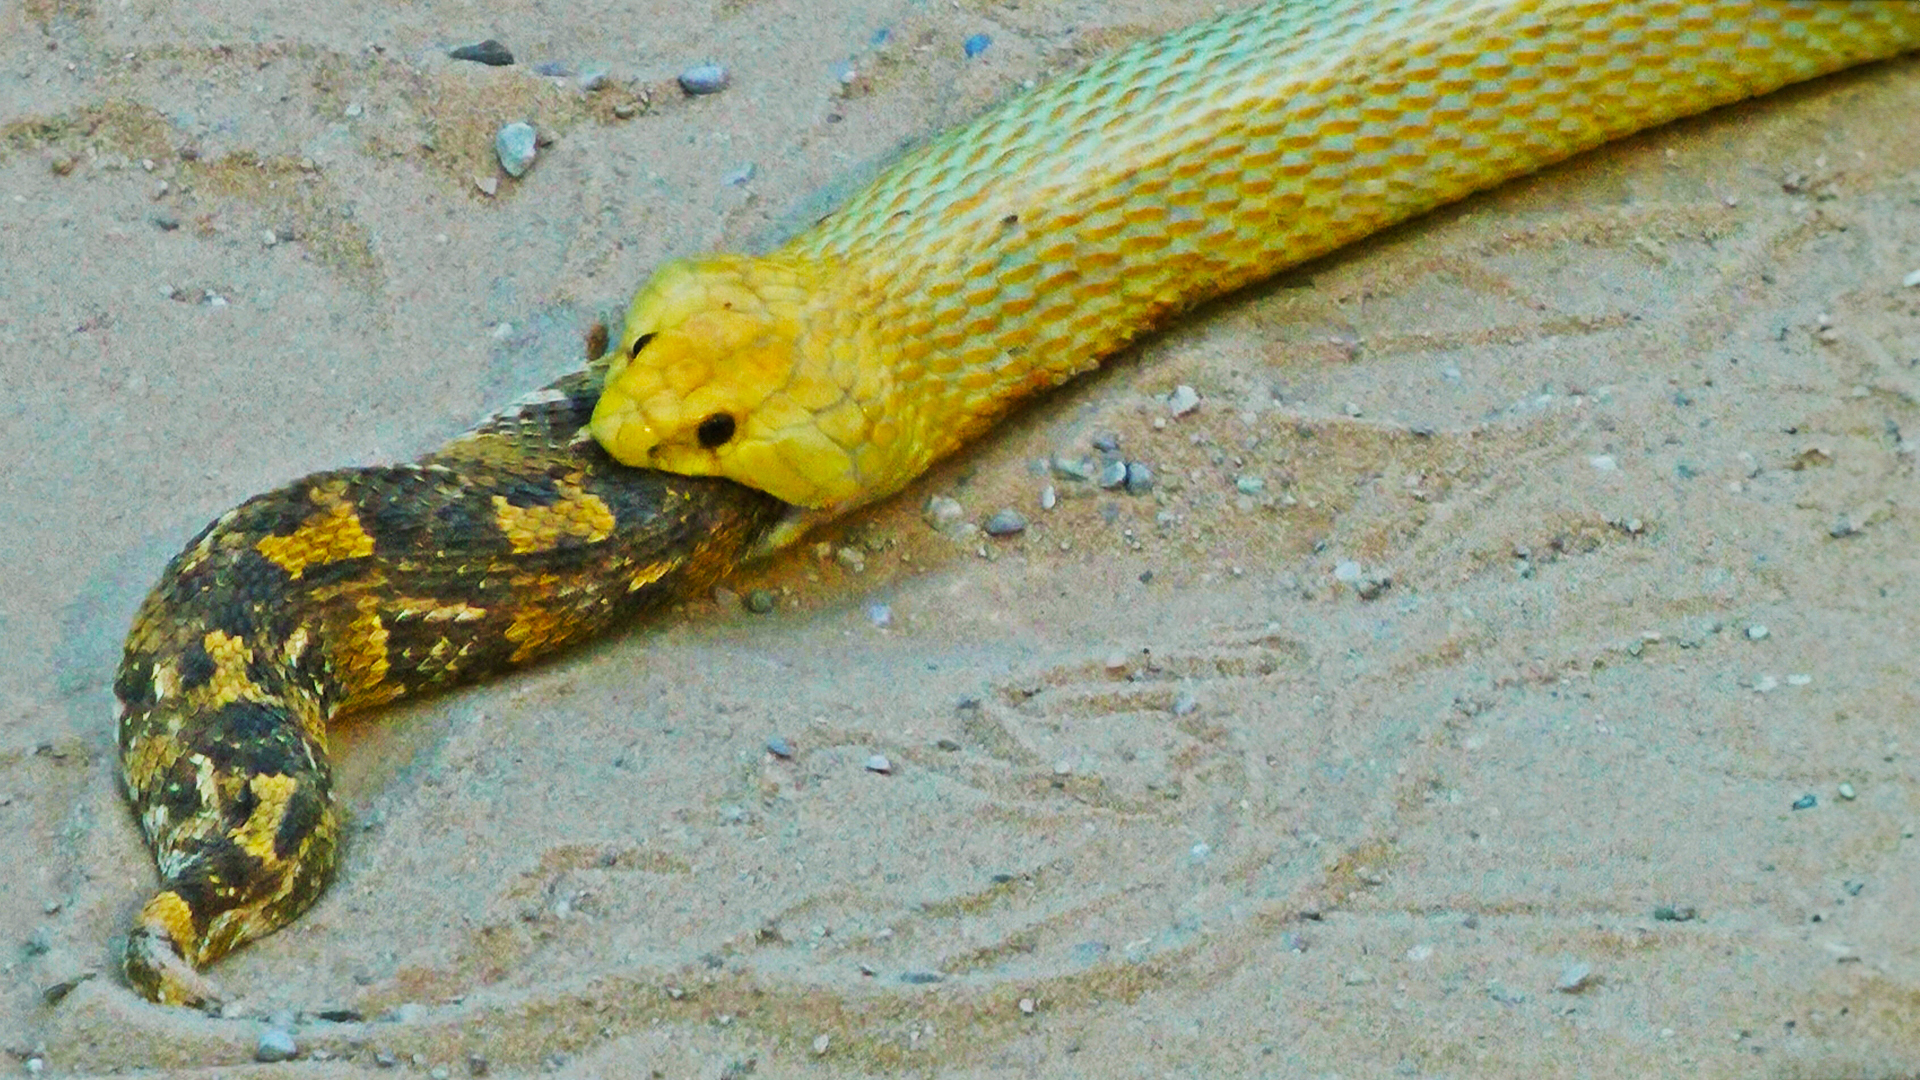 Snake Eaten Alive Slithers Inside Bigger Snake